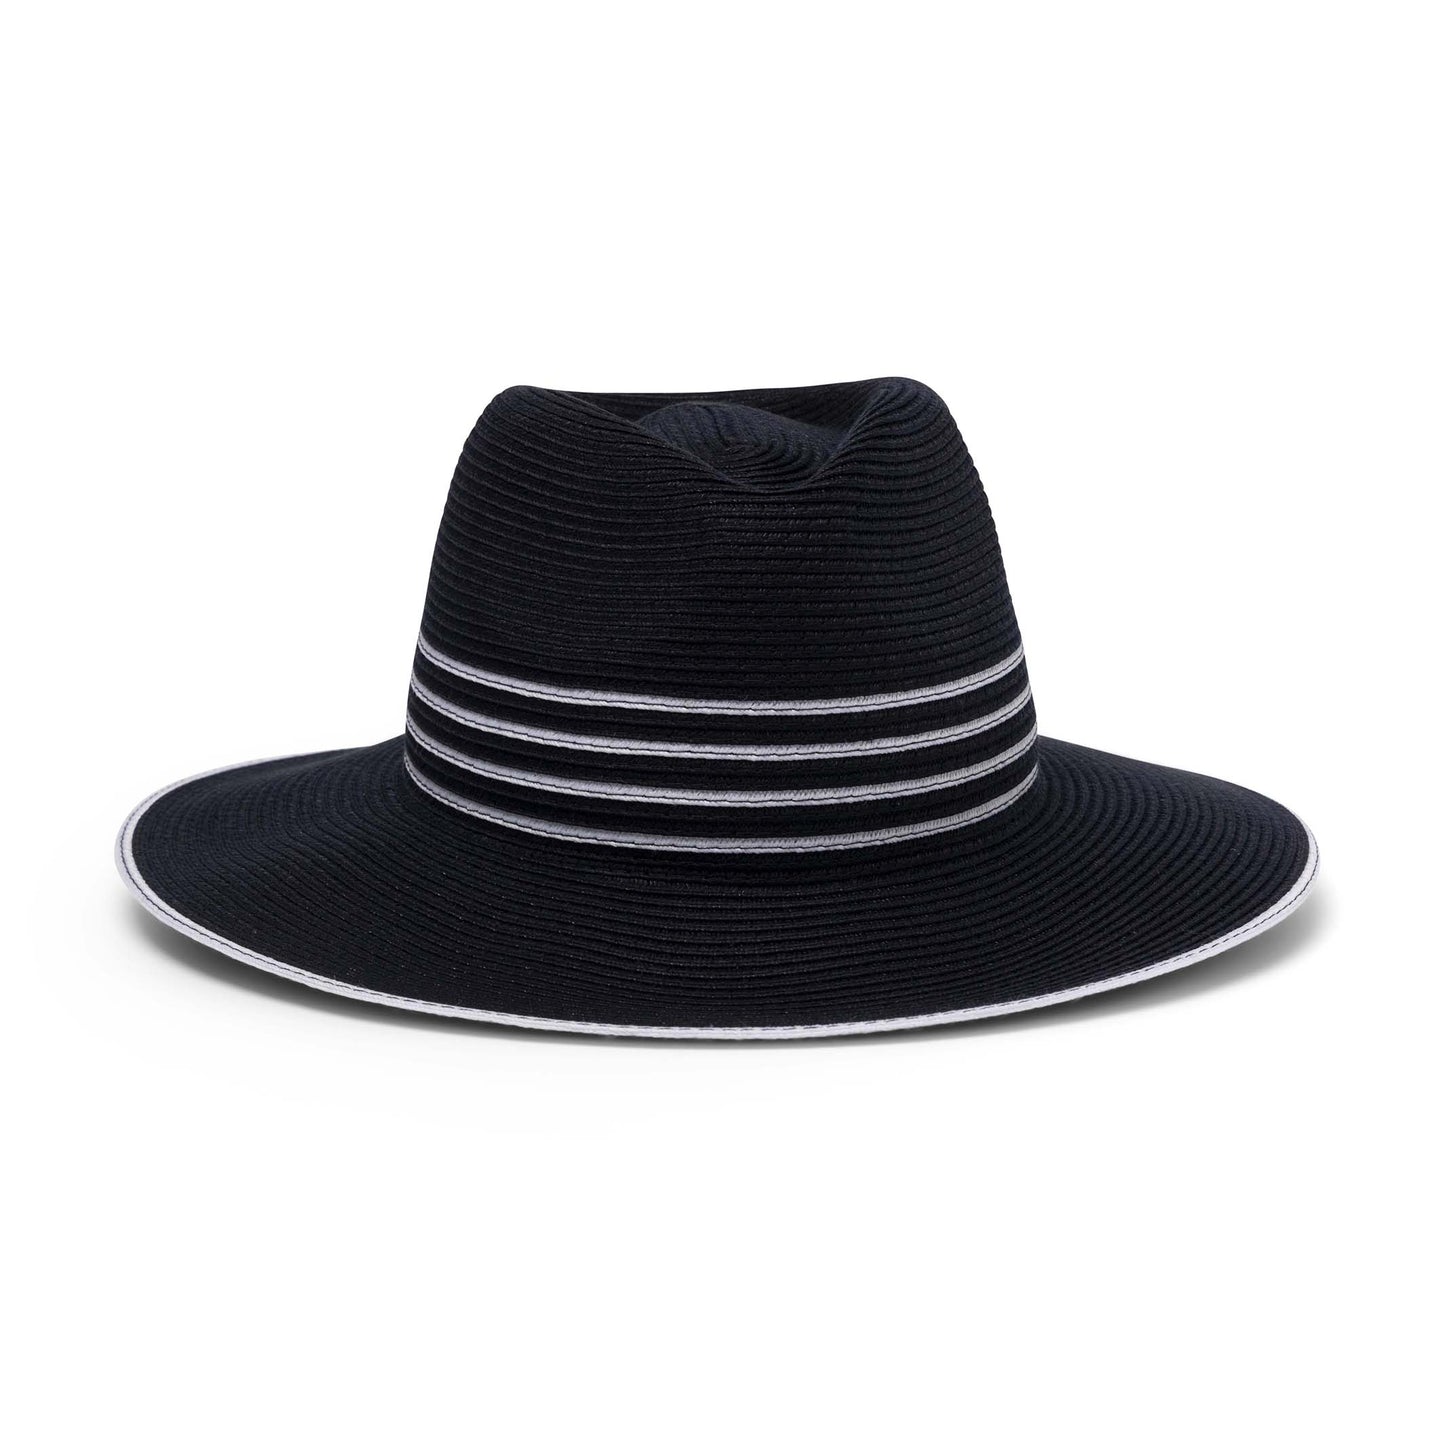 Canopy Bay Bonville FLEXIBRAID® Fedora Hat